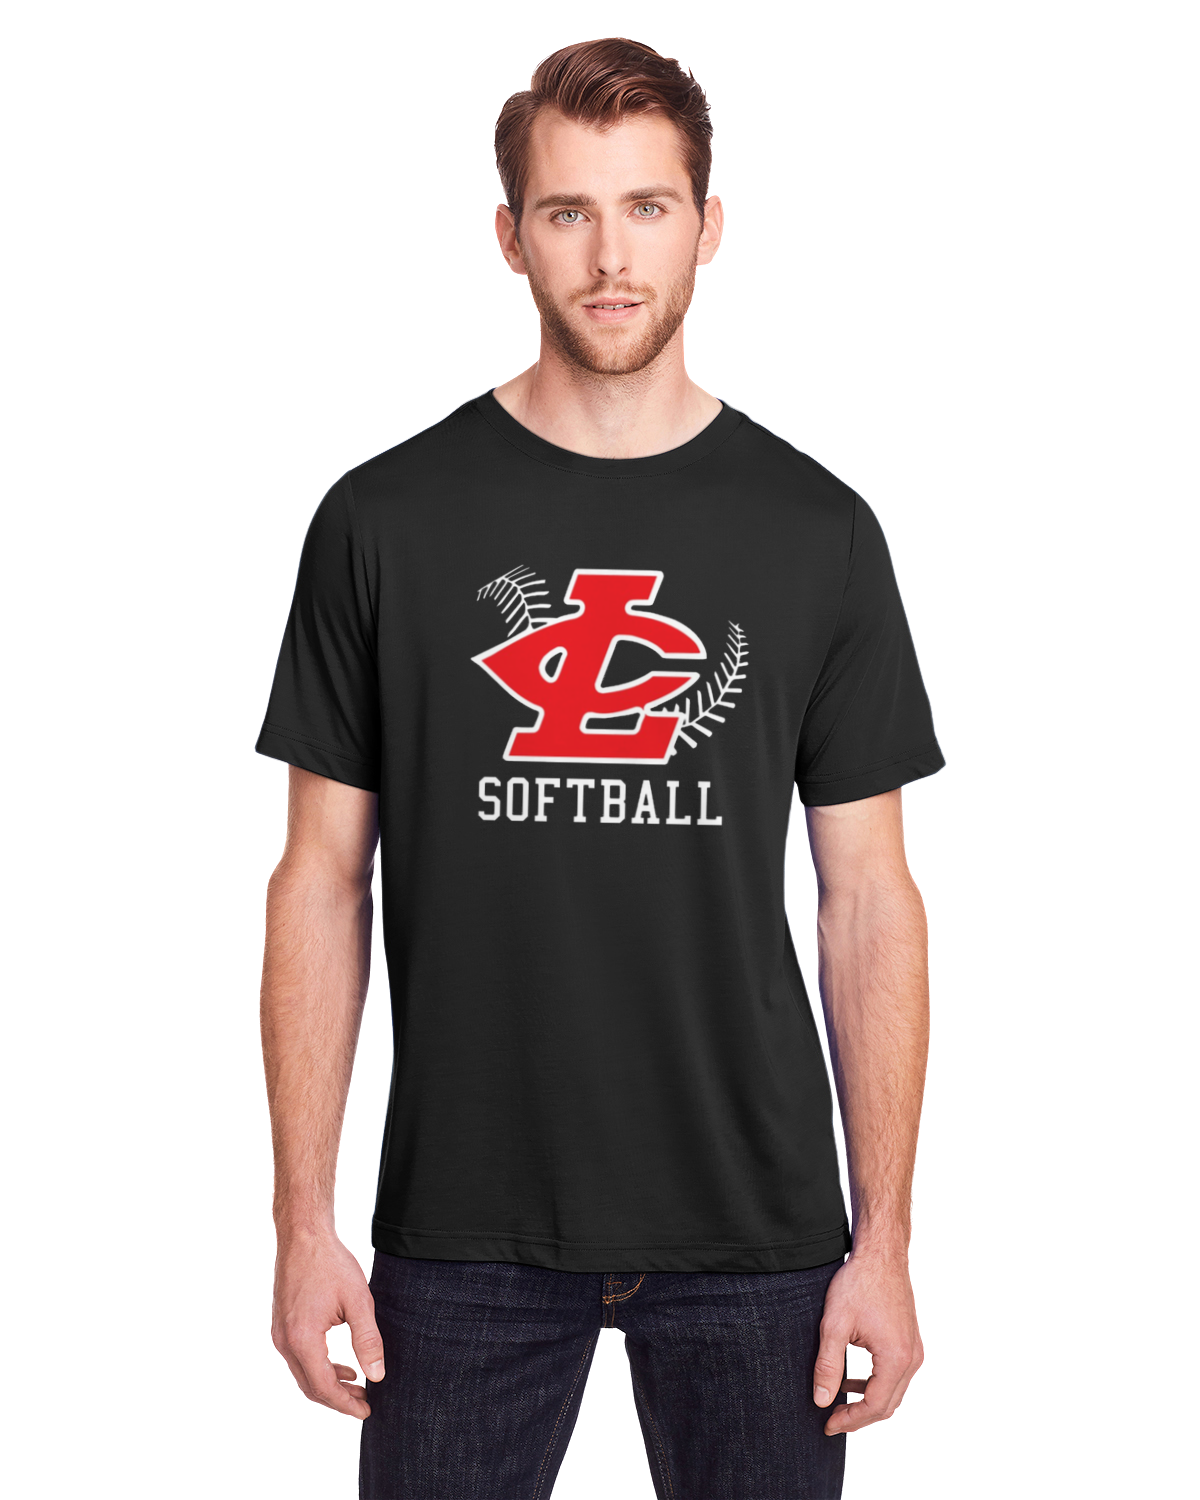 CLLL Softball Unisex Performance Tshirt TALL SIZES Gildan Ultra Cotton BLACK